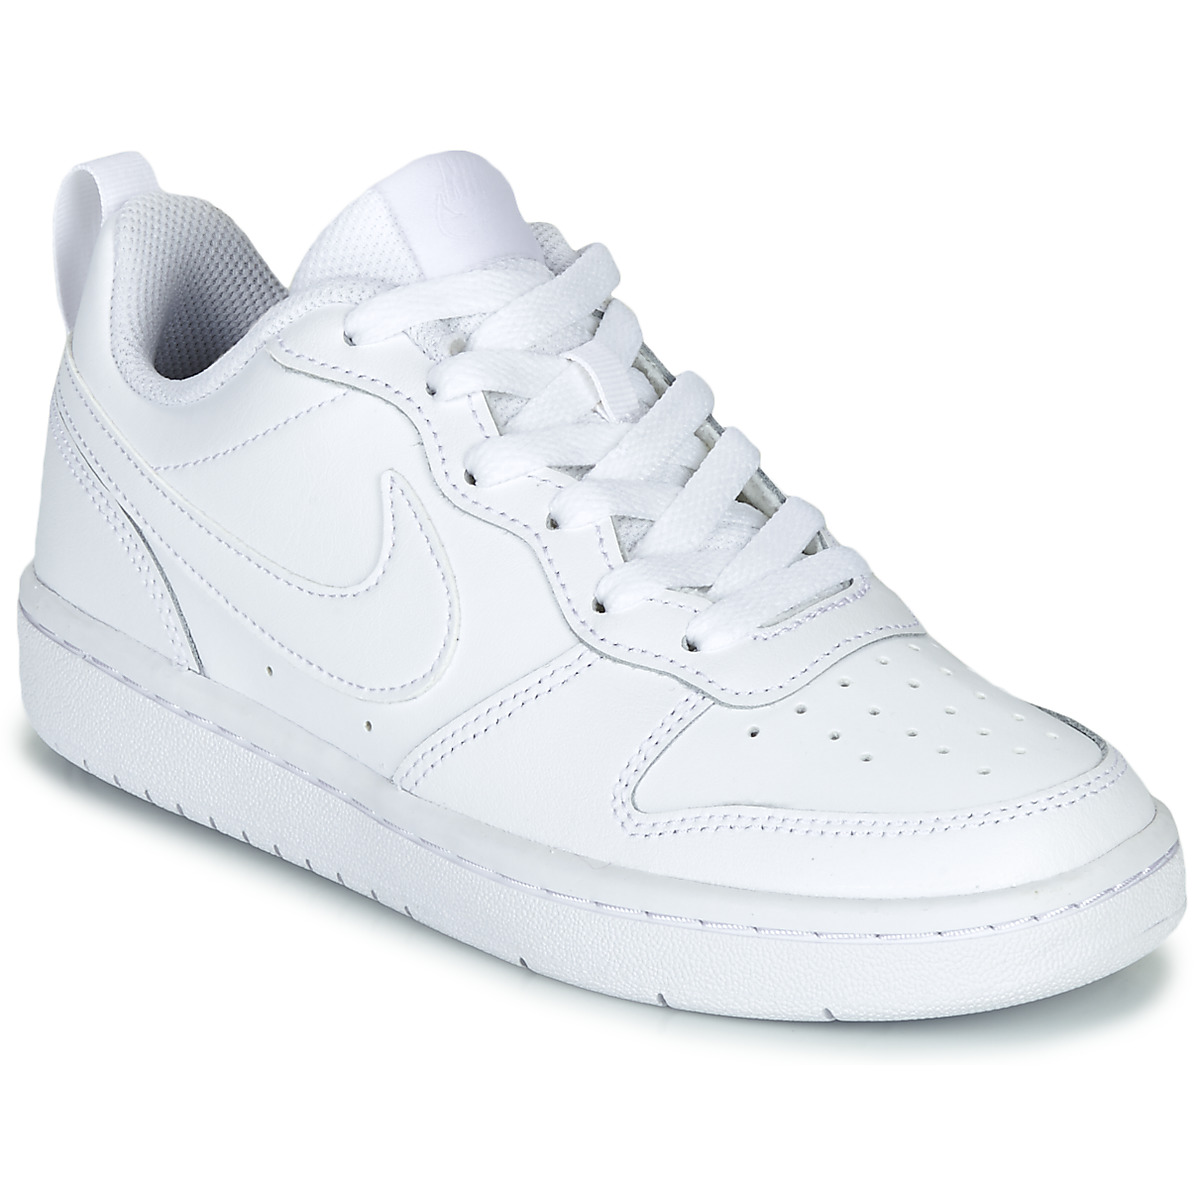 Nike COURT BOROUGH LOW 2 GS Bianco - Consegna gratuita | Spartoo.it ! -  Scarpe Sneakers basse Bambino 44,99 €